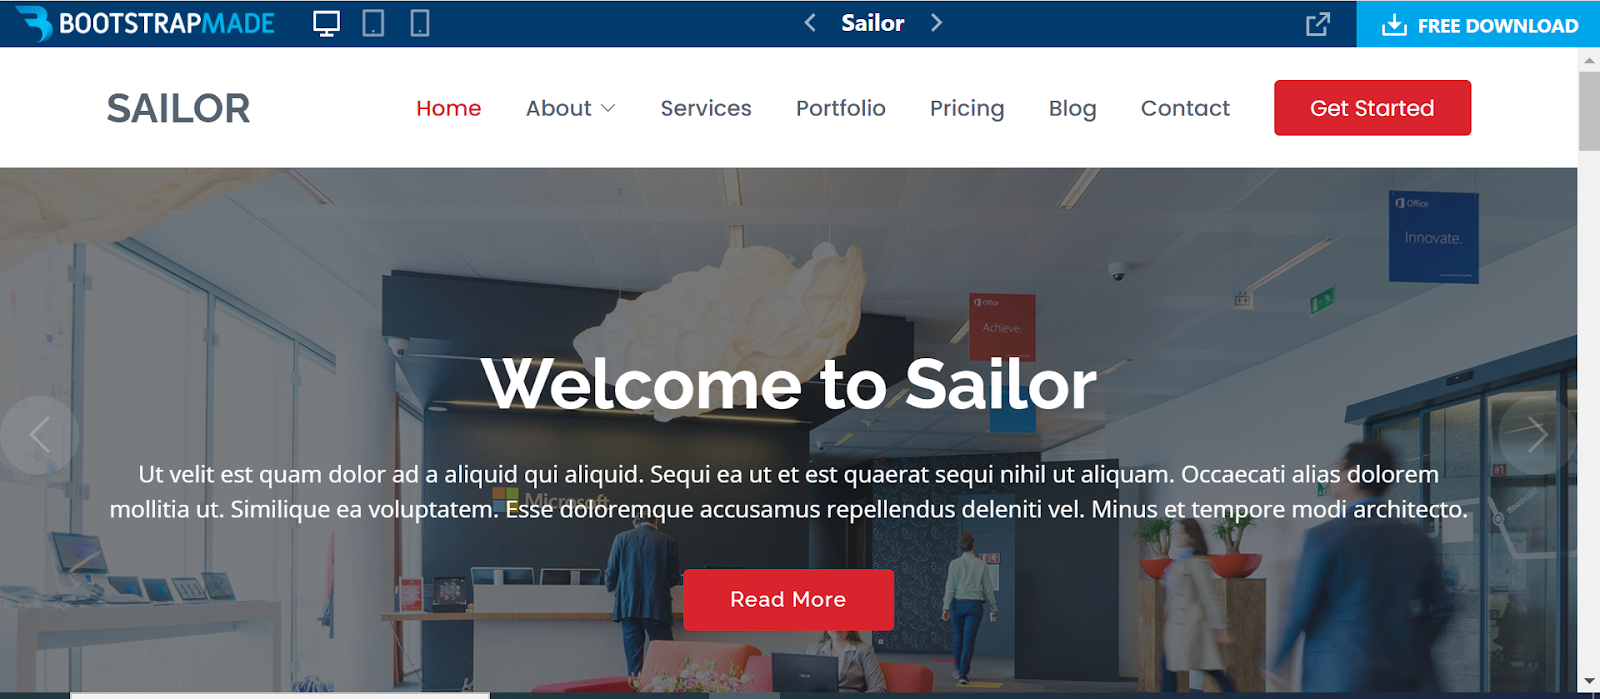 Bootstrap website templates, Sailor